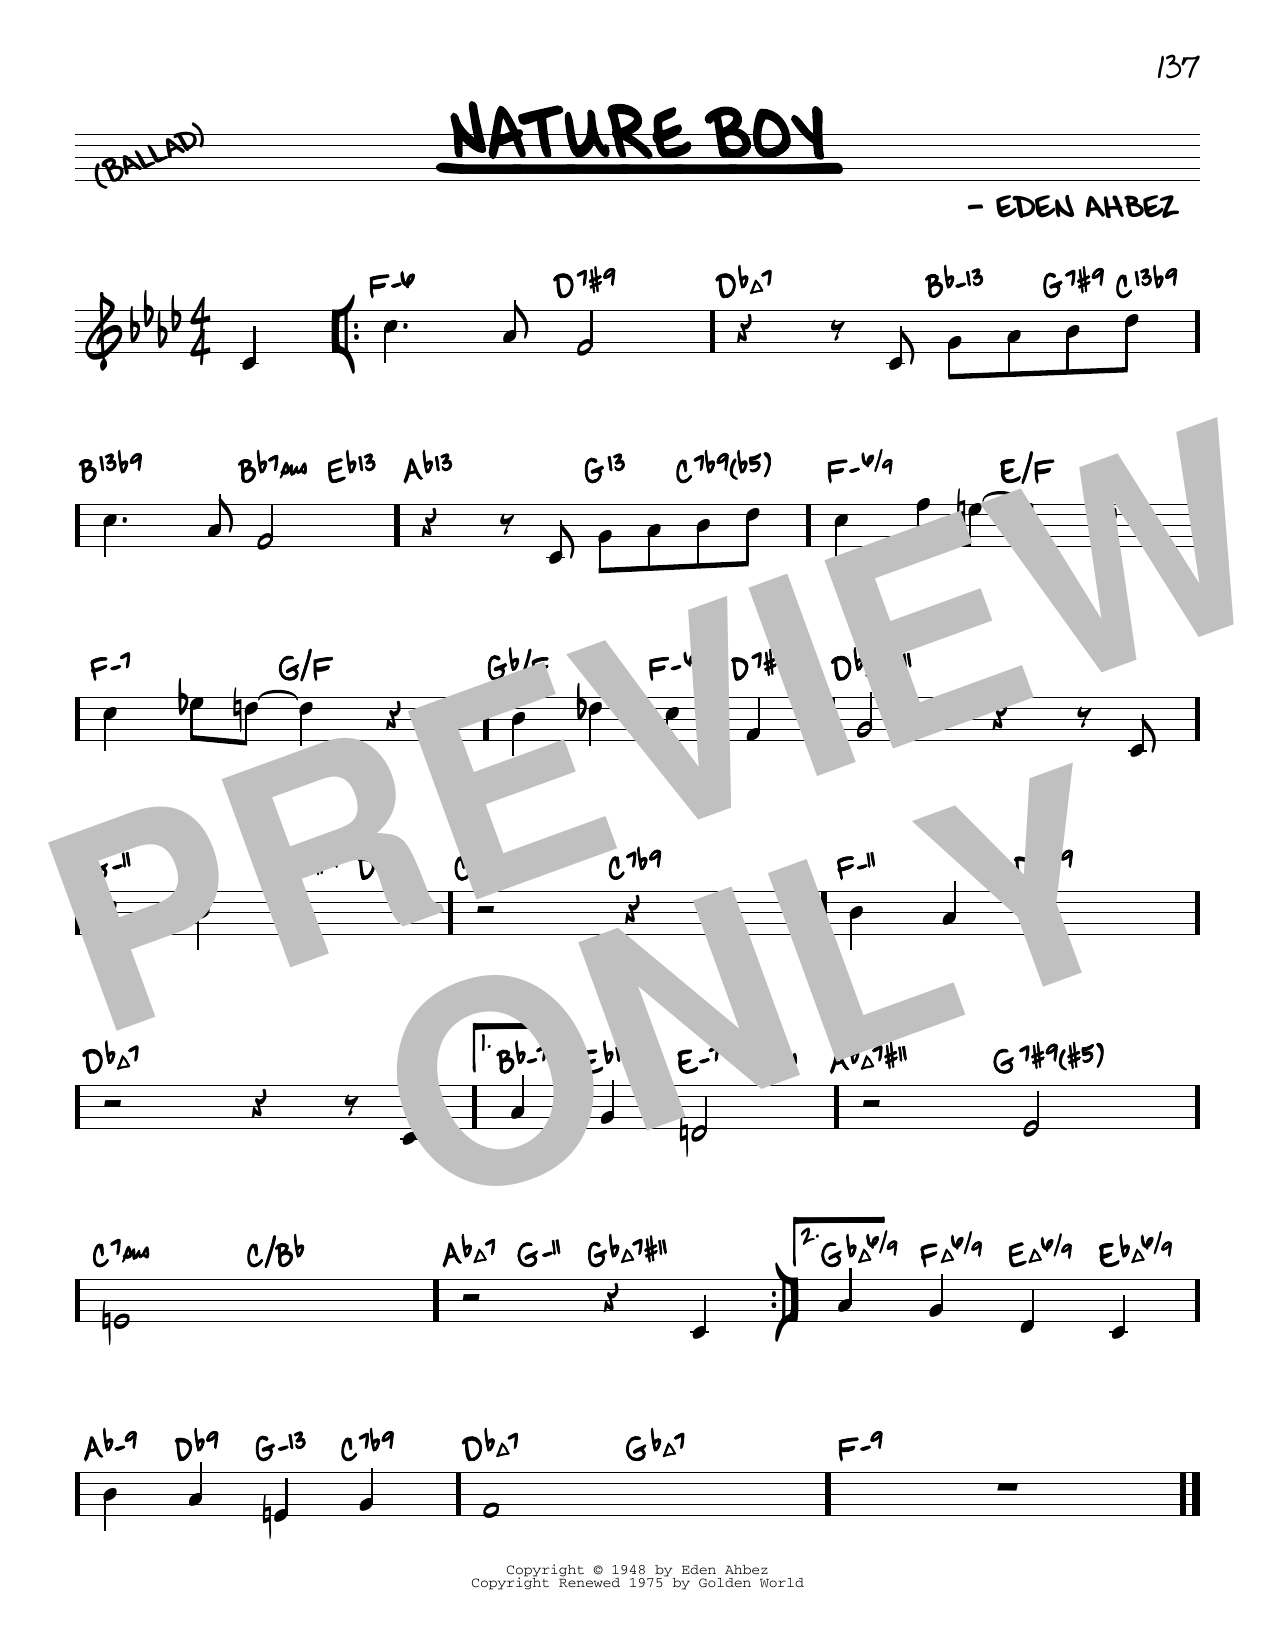 Nat King Cole Nature Boy (arr. David Hazeltine) Sheet Music Notes & Chords for Real Book – Enhanced Chords - Download or Print PDF